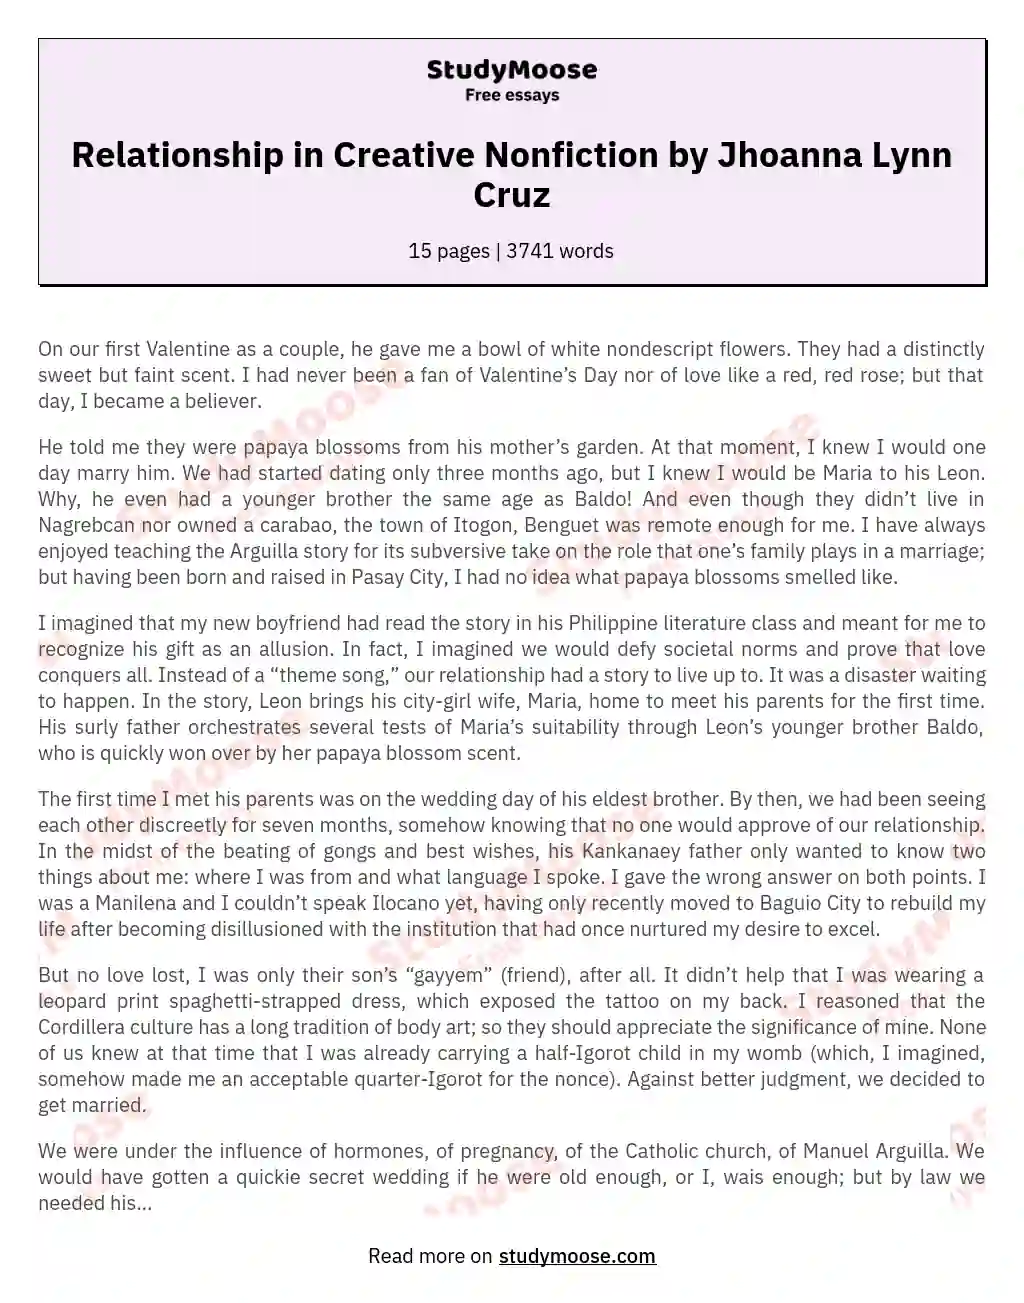 Relationship in Creative Nonfiction by Jhoanna Lynn Cruz essay